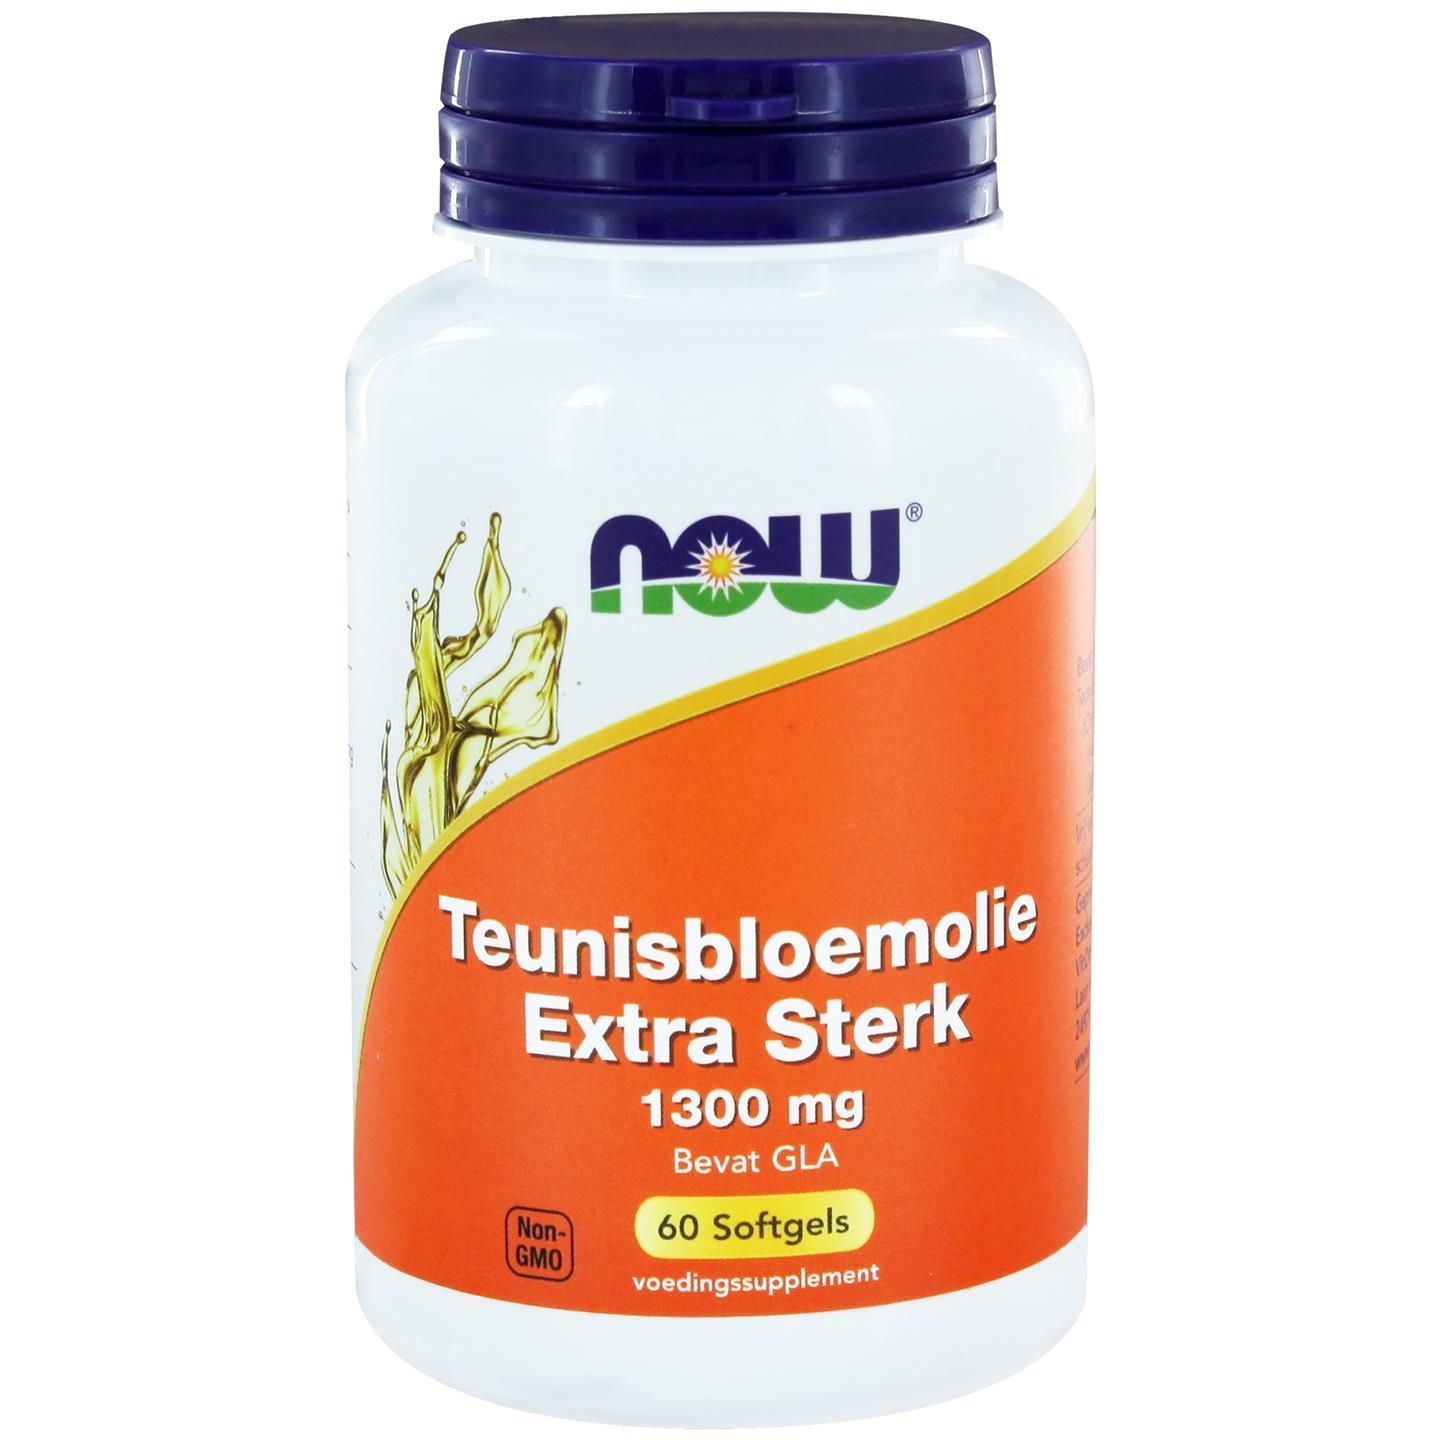 Teunisbloemolie extra sterk 1300 mg - 60 softgels